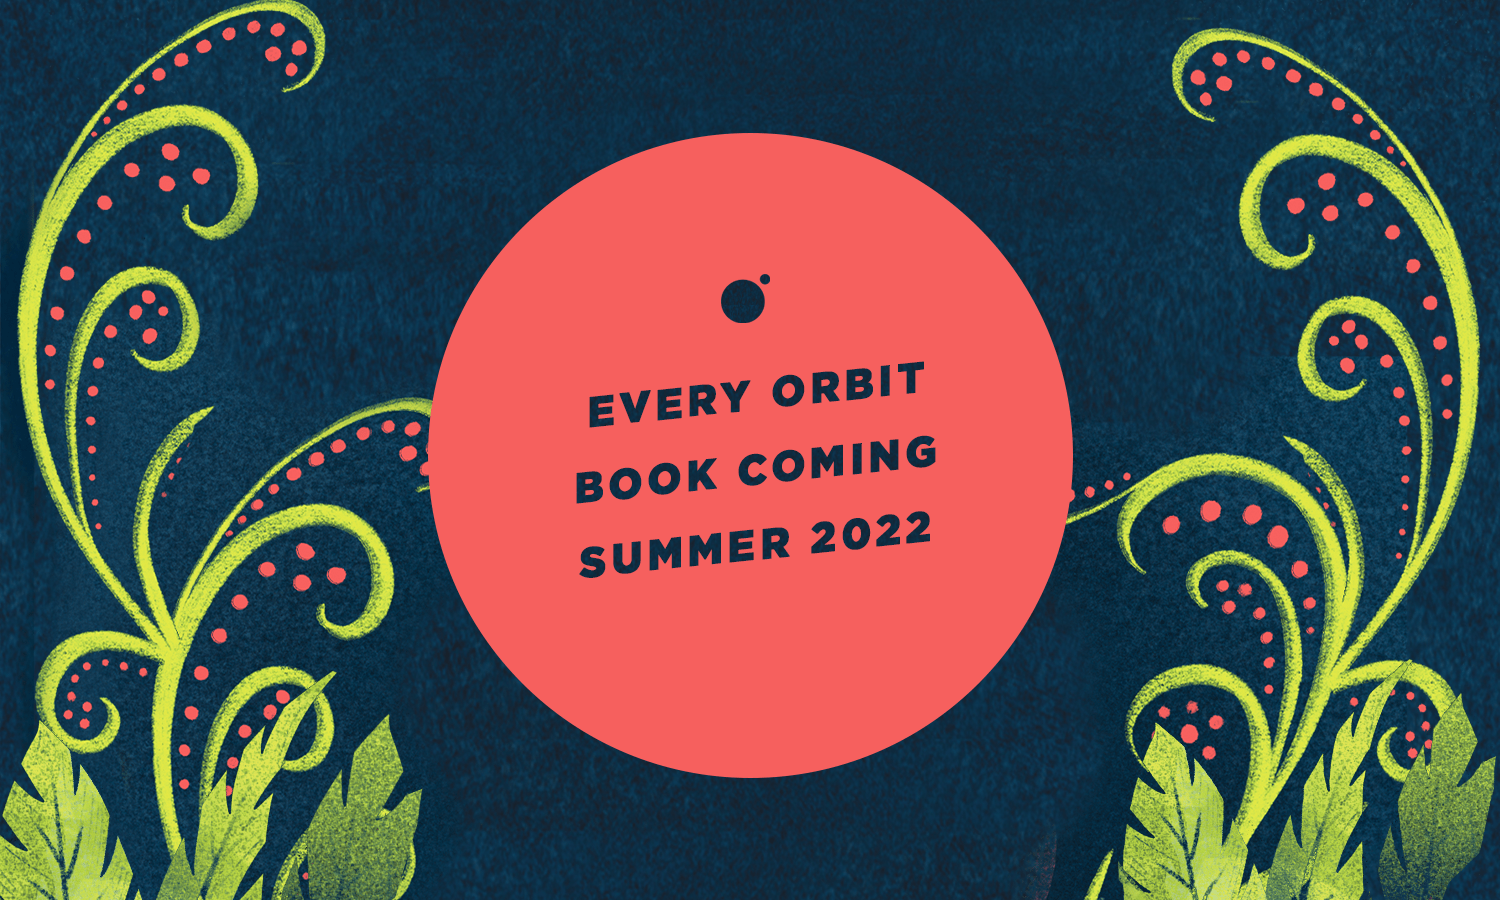 Every Orbit Book Coming Summer 2022